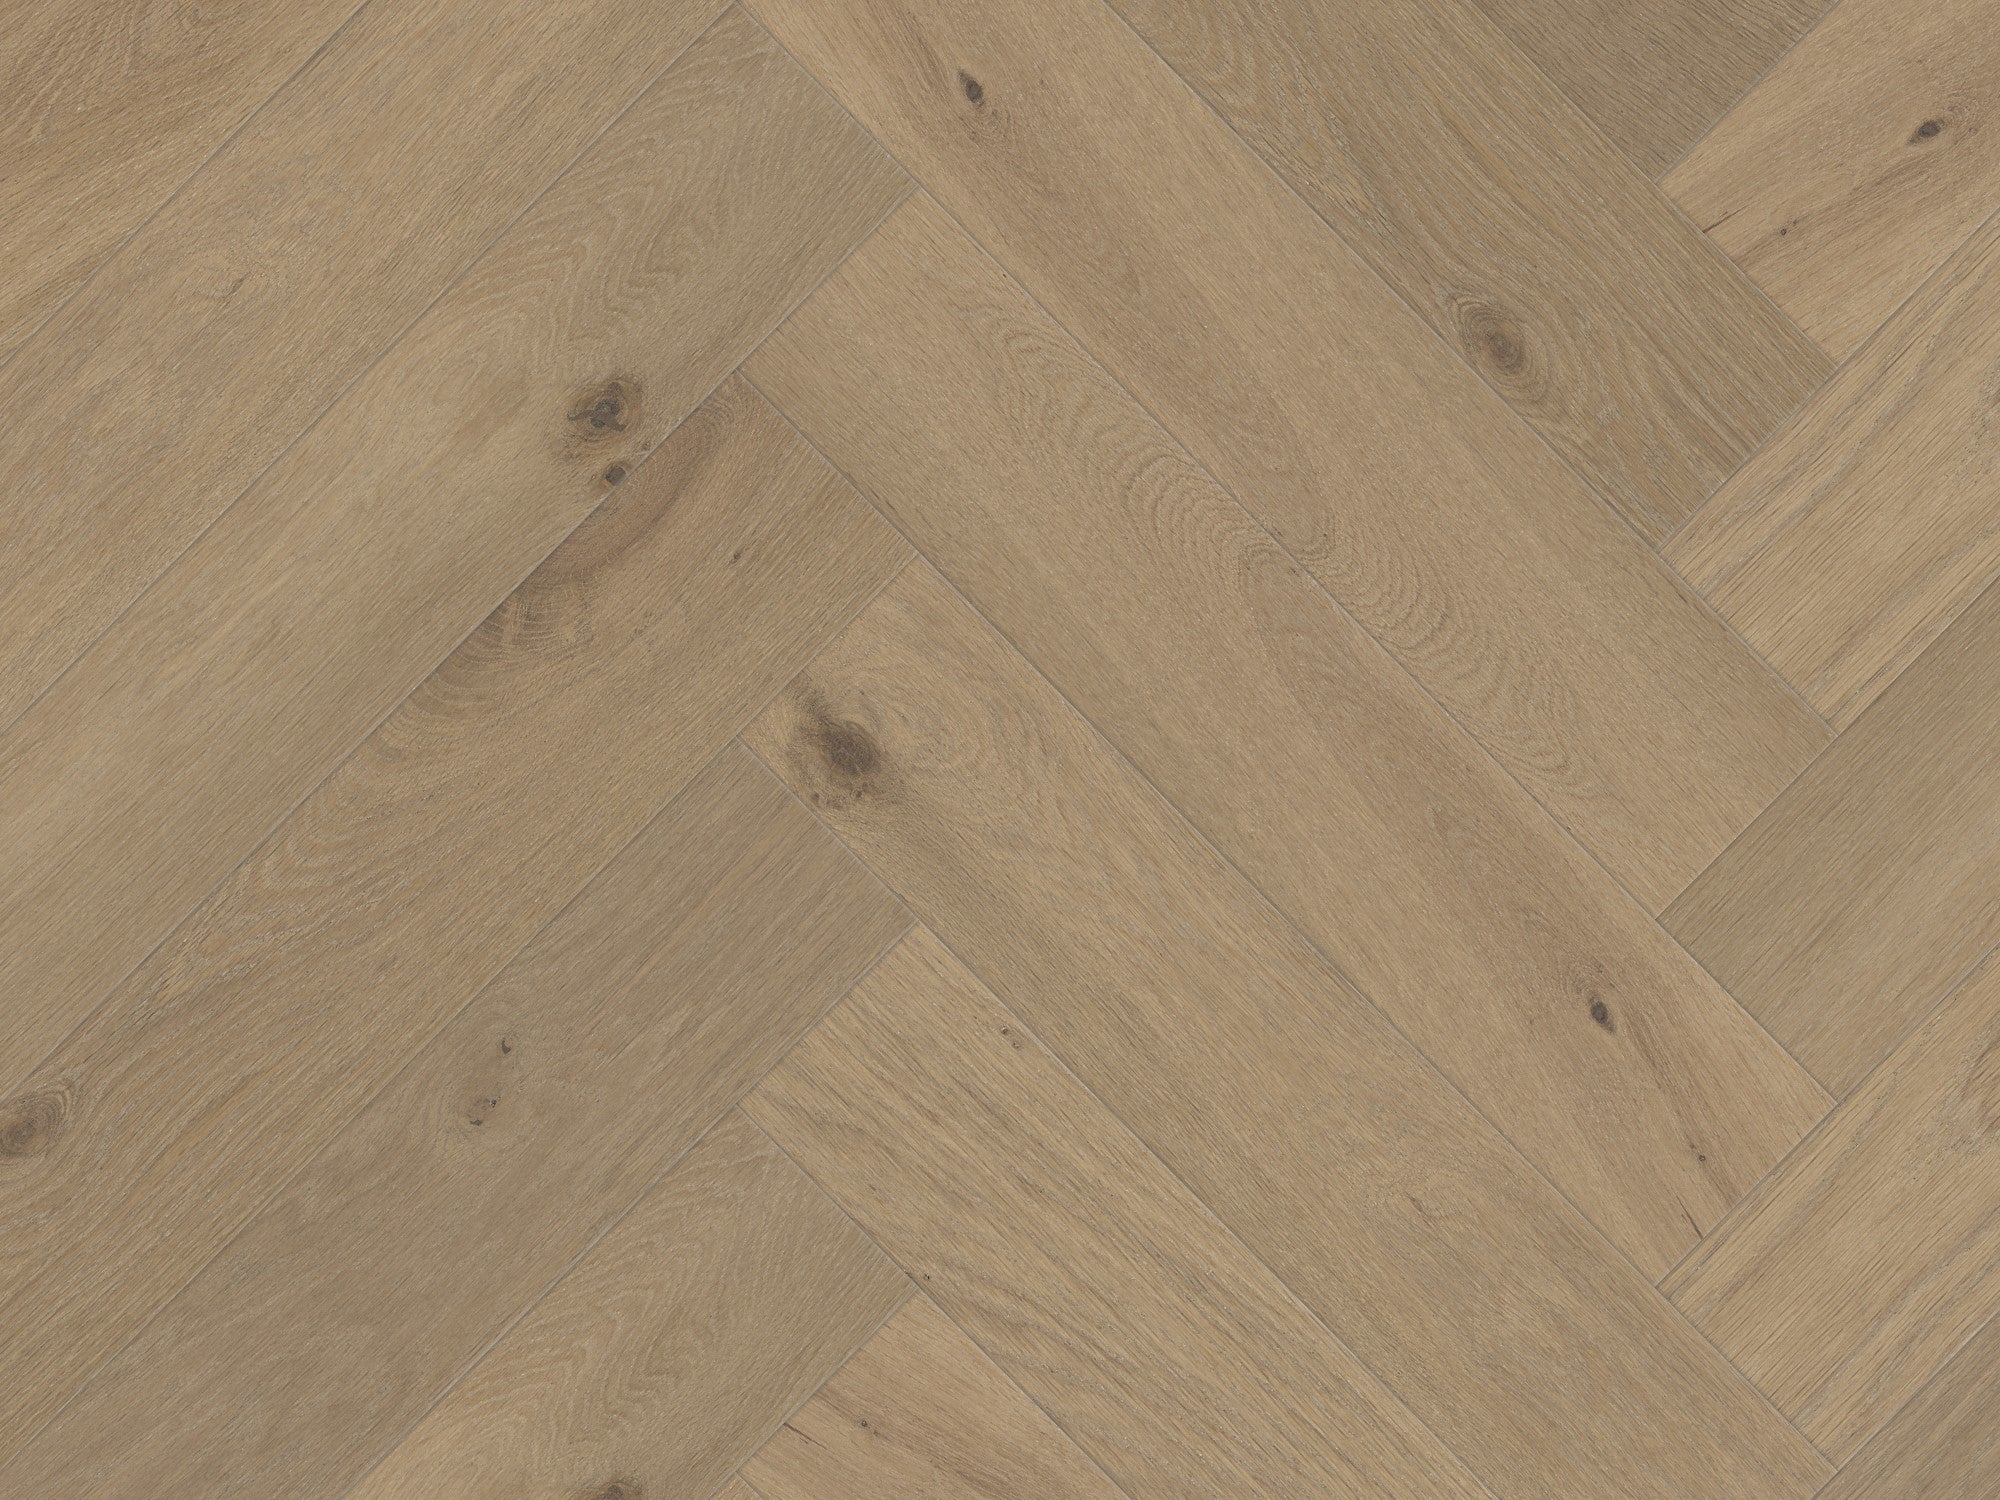 duchateau signature terra savanna herringbone european oak engineered hardnatural wood floor uv lacquer finish for interior use distributed by surface group international